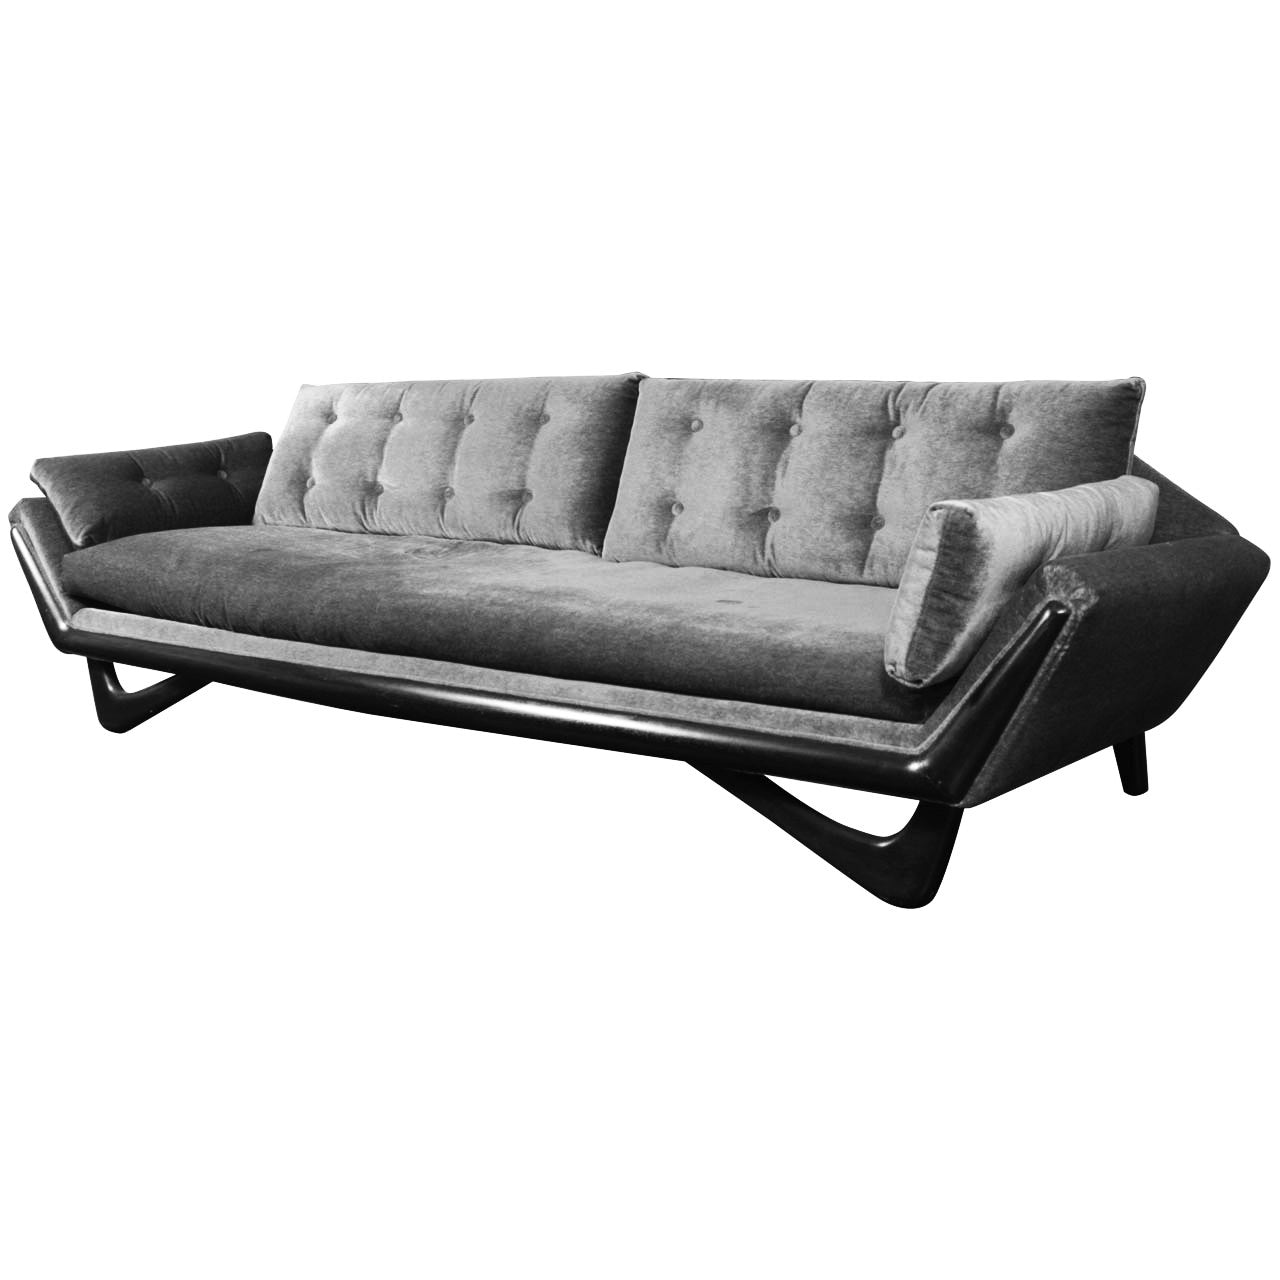 modern-adrian-pearsall-sofa-2404-s-craft-associates-03